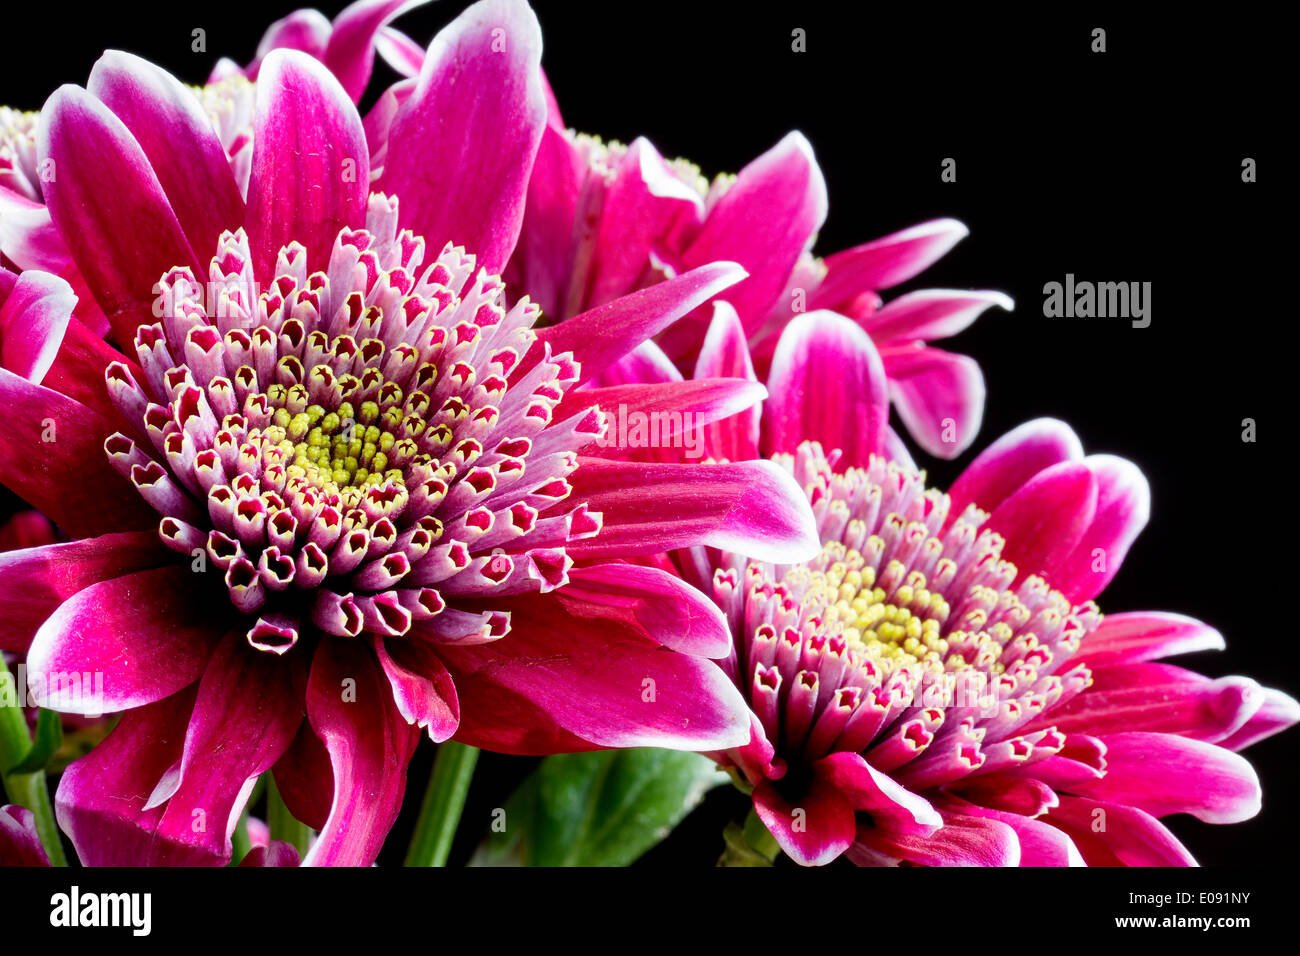 Close up image of dark pink chrysanthemum flowers on black Stock Photo